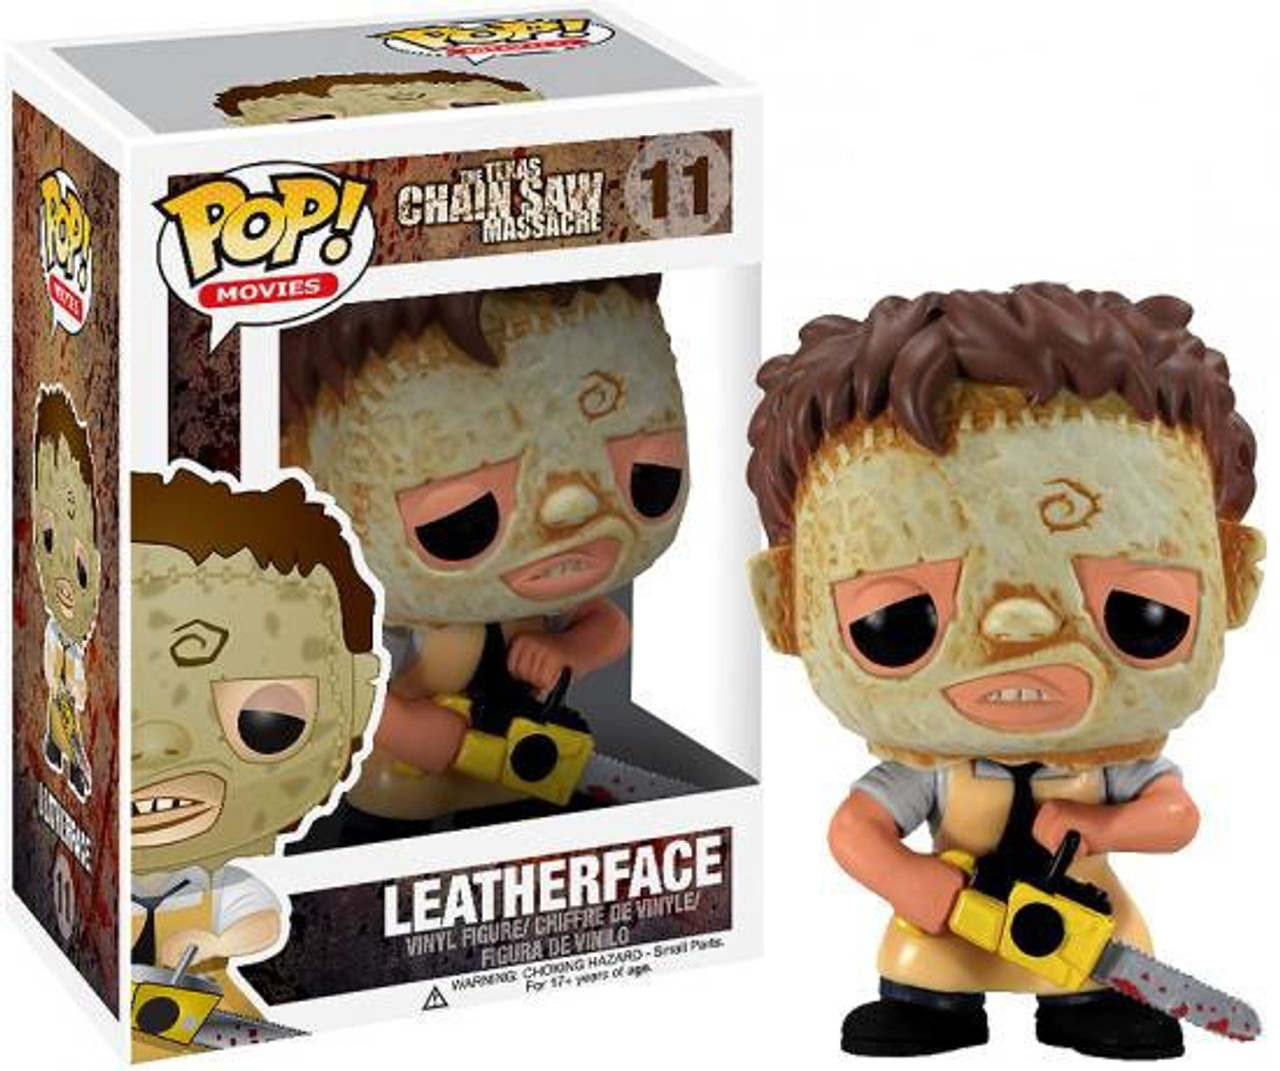 Funko The Texas Chainsaw Massacre Pop Movies Leatherface Vinyl Figure 11 Toywiz - leatherfacesouth park roblox